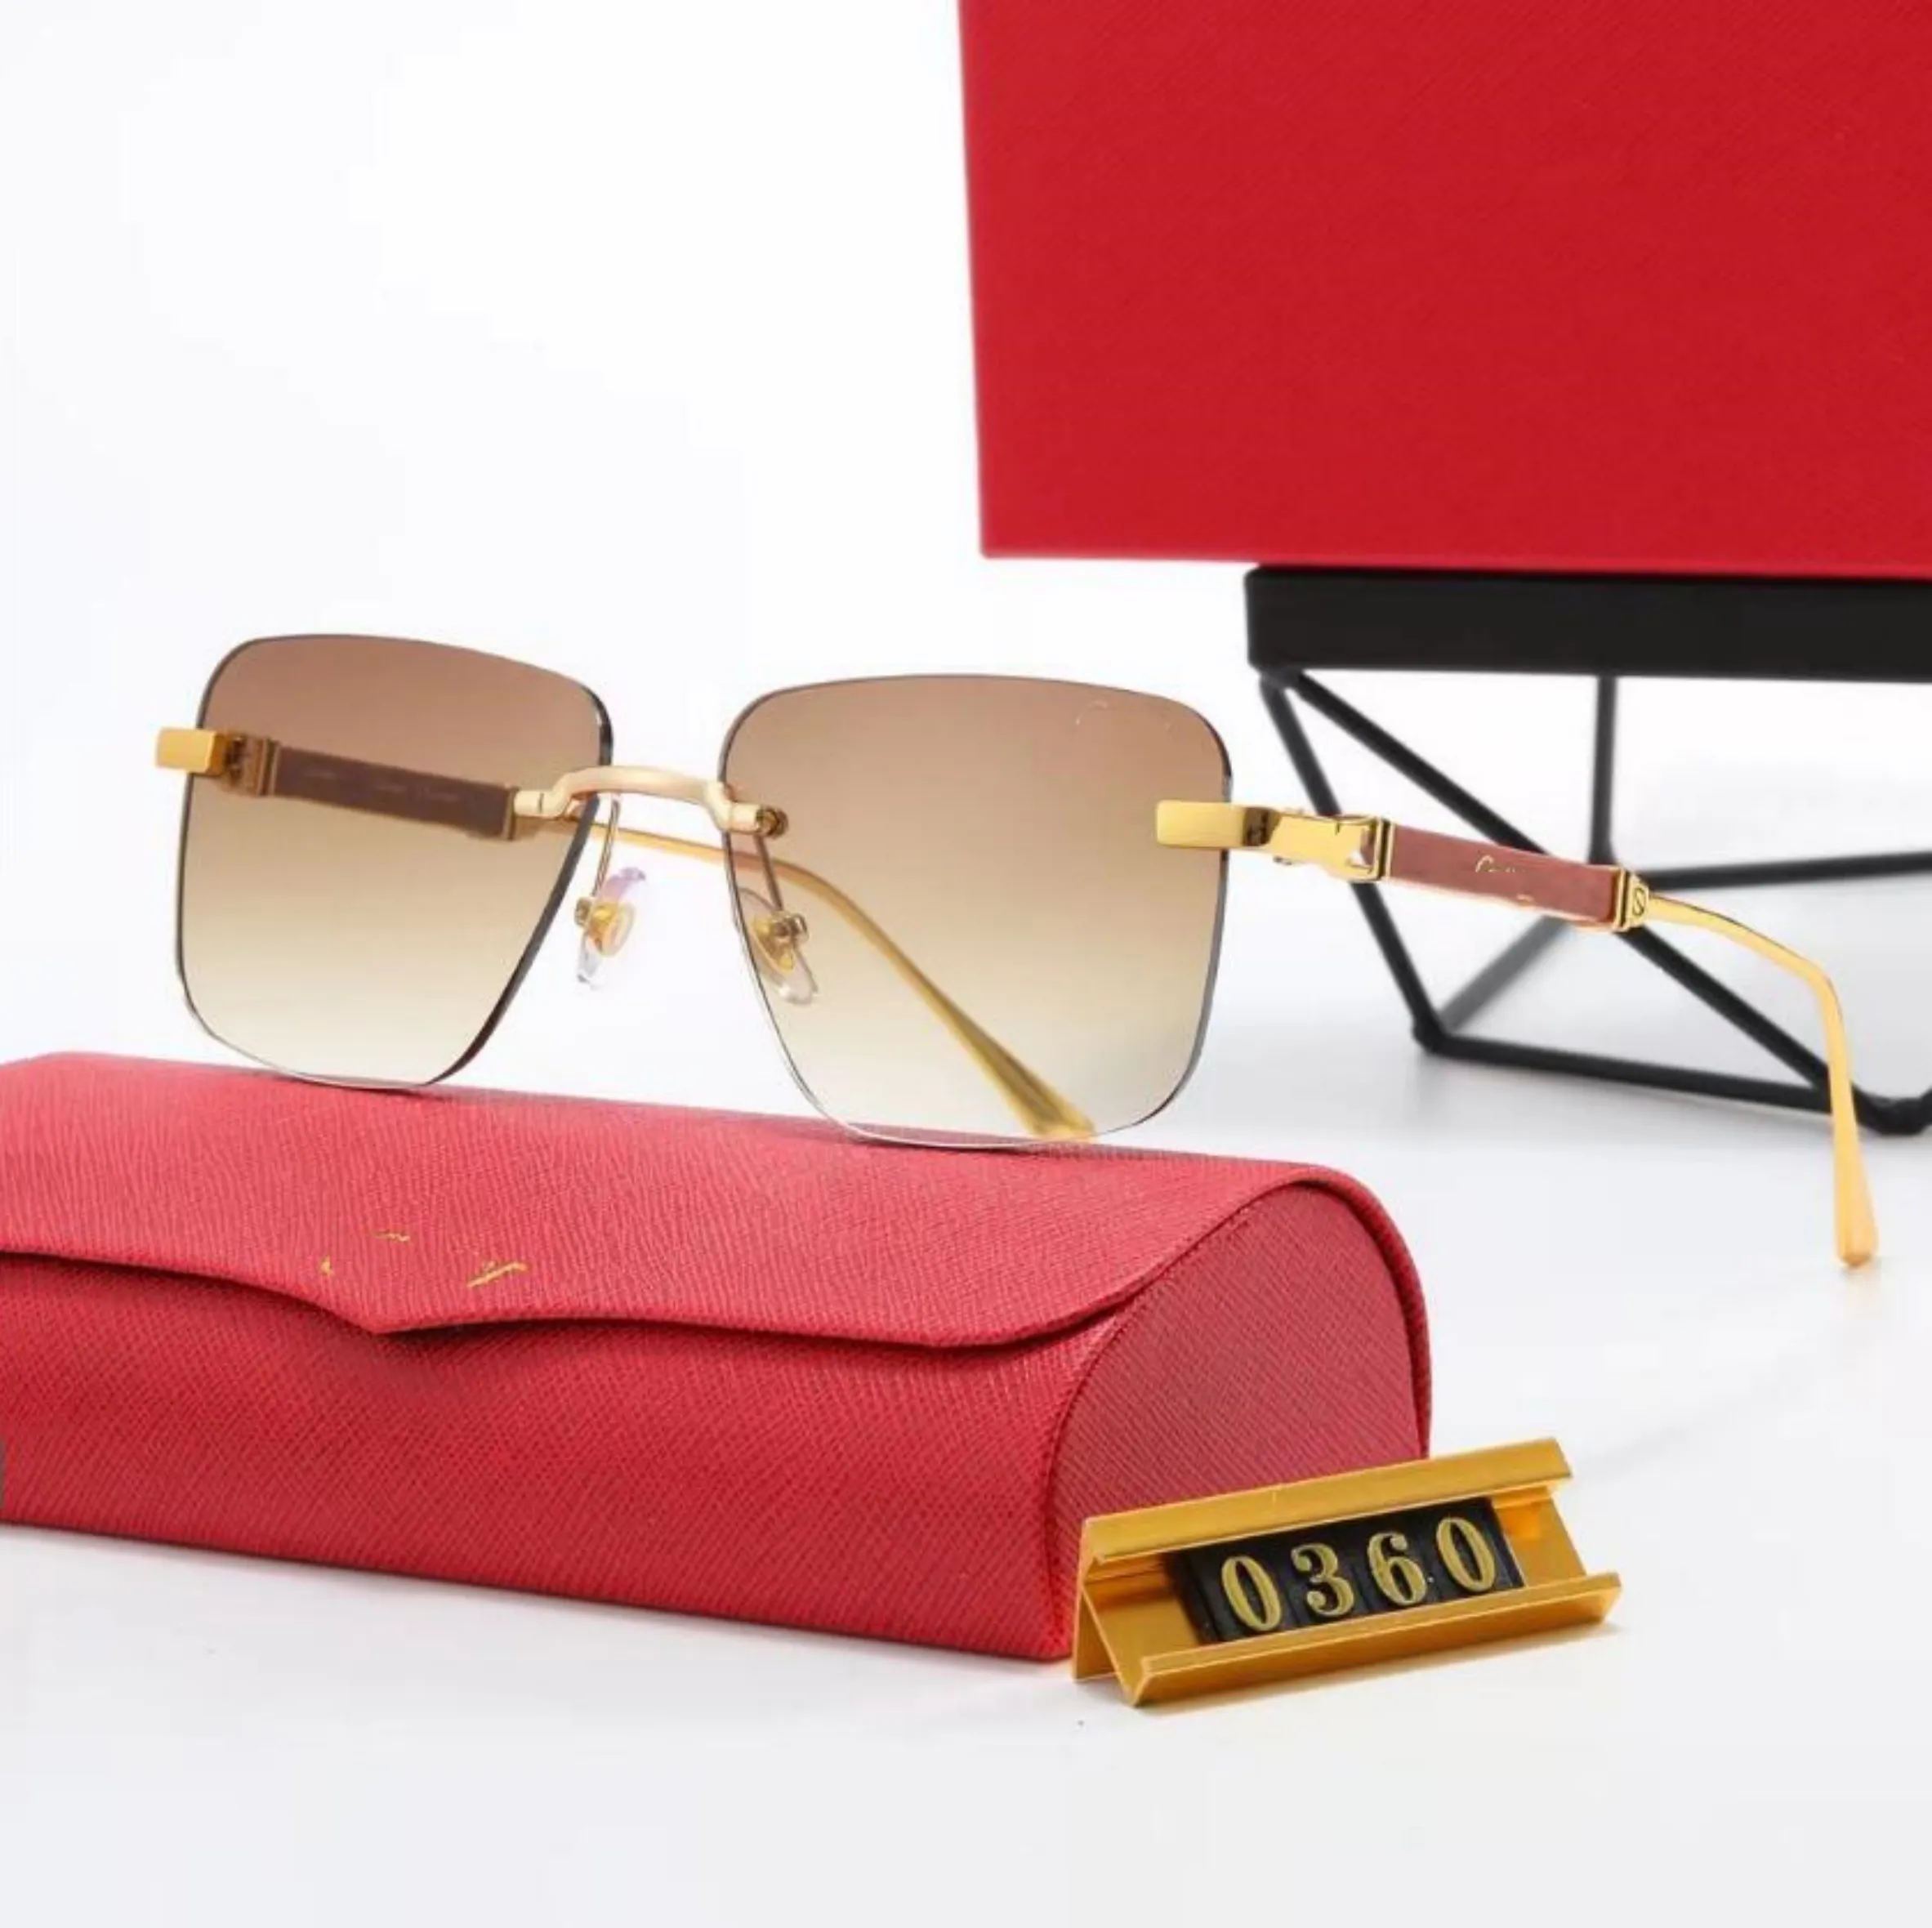 Men's Designer Sunglasses Fashion Luxury Gold Vintage Frame Square Metal Shape Women's Classic Sunglasses Glasses Glasses UV Lens Organic Box